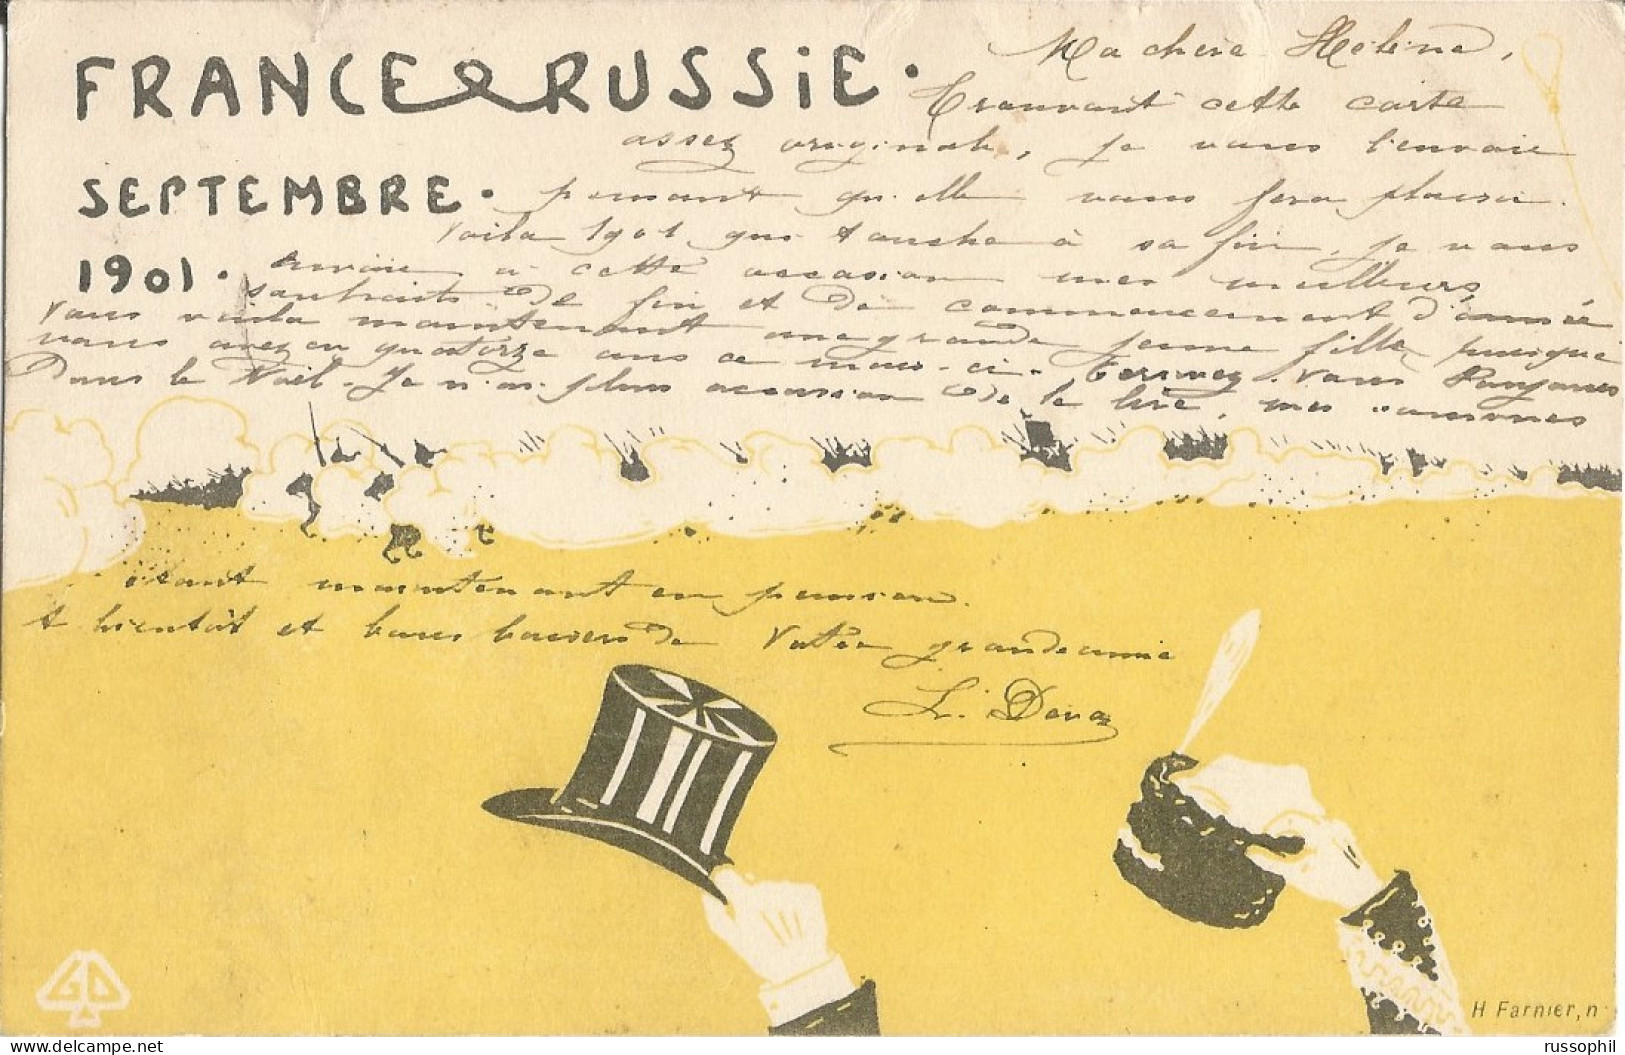 FRANCO RUSSIAN ALLIANCE - FRANCE RUSSIE SEPTEMBRE 1901 - H. FARNIER N° 6 - 1901 - Evènements